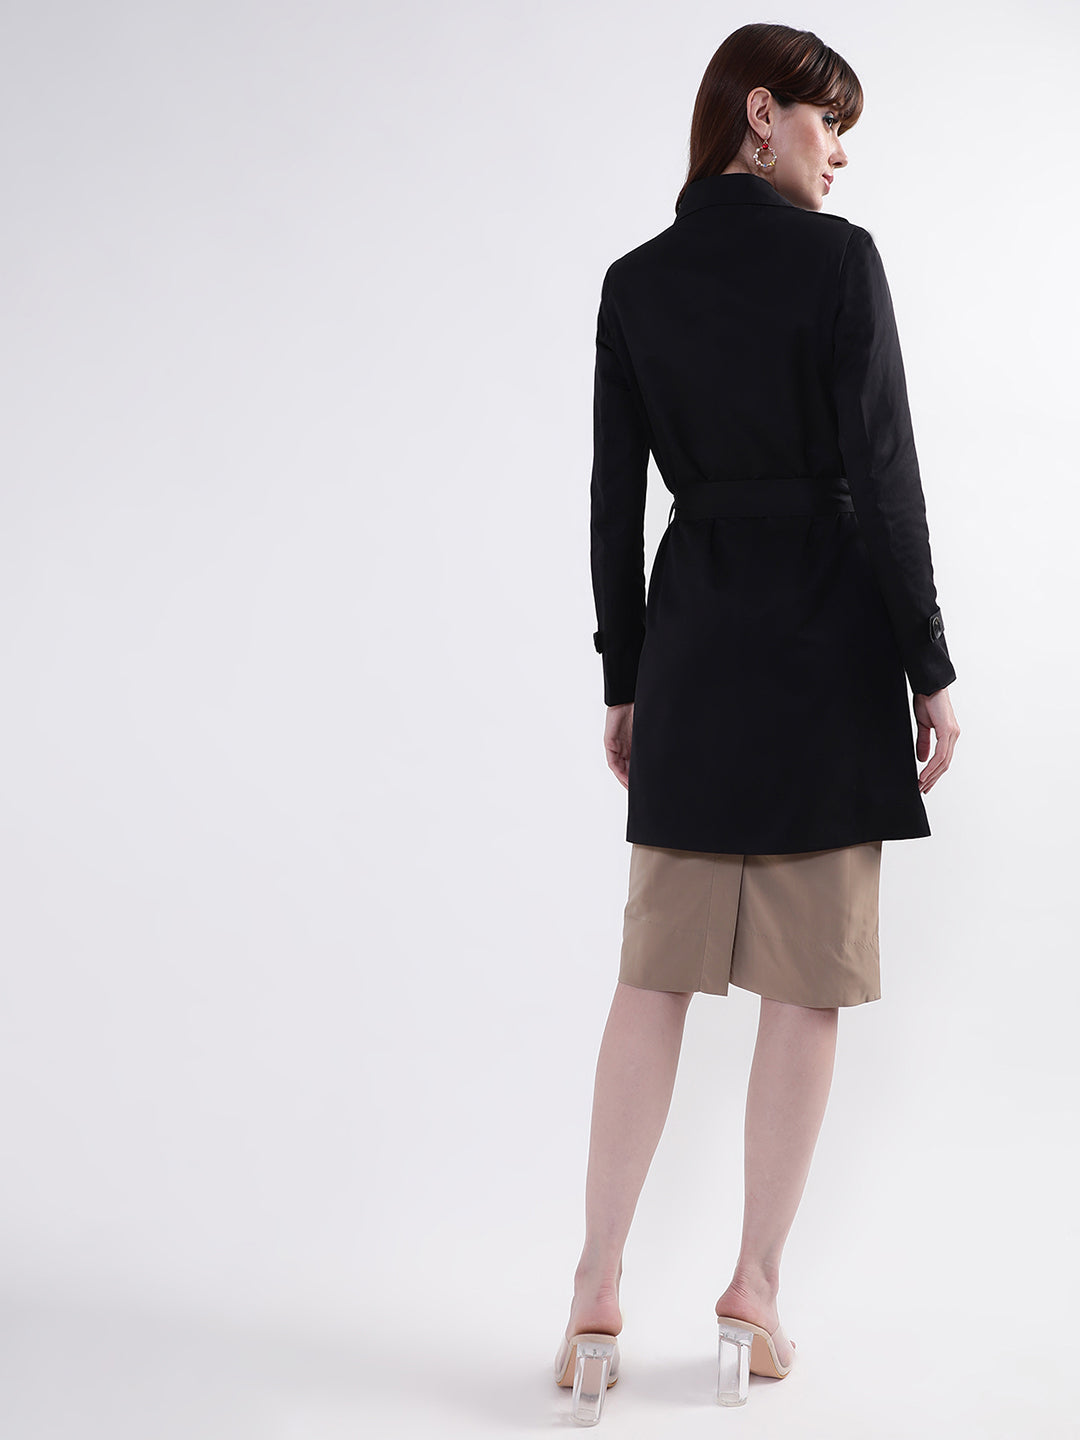 Centre Stage Women Black Solid Collar Overcoat